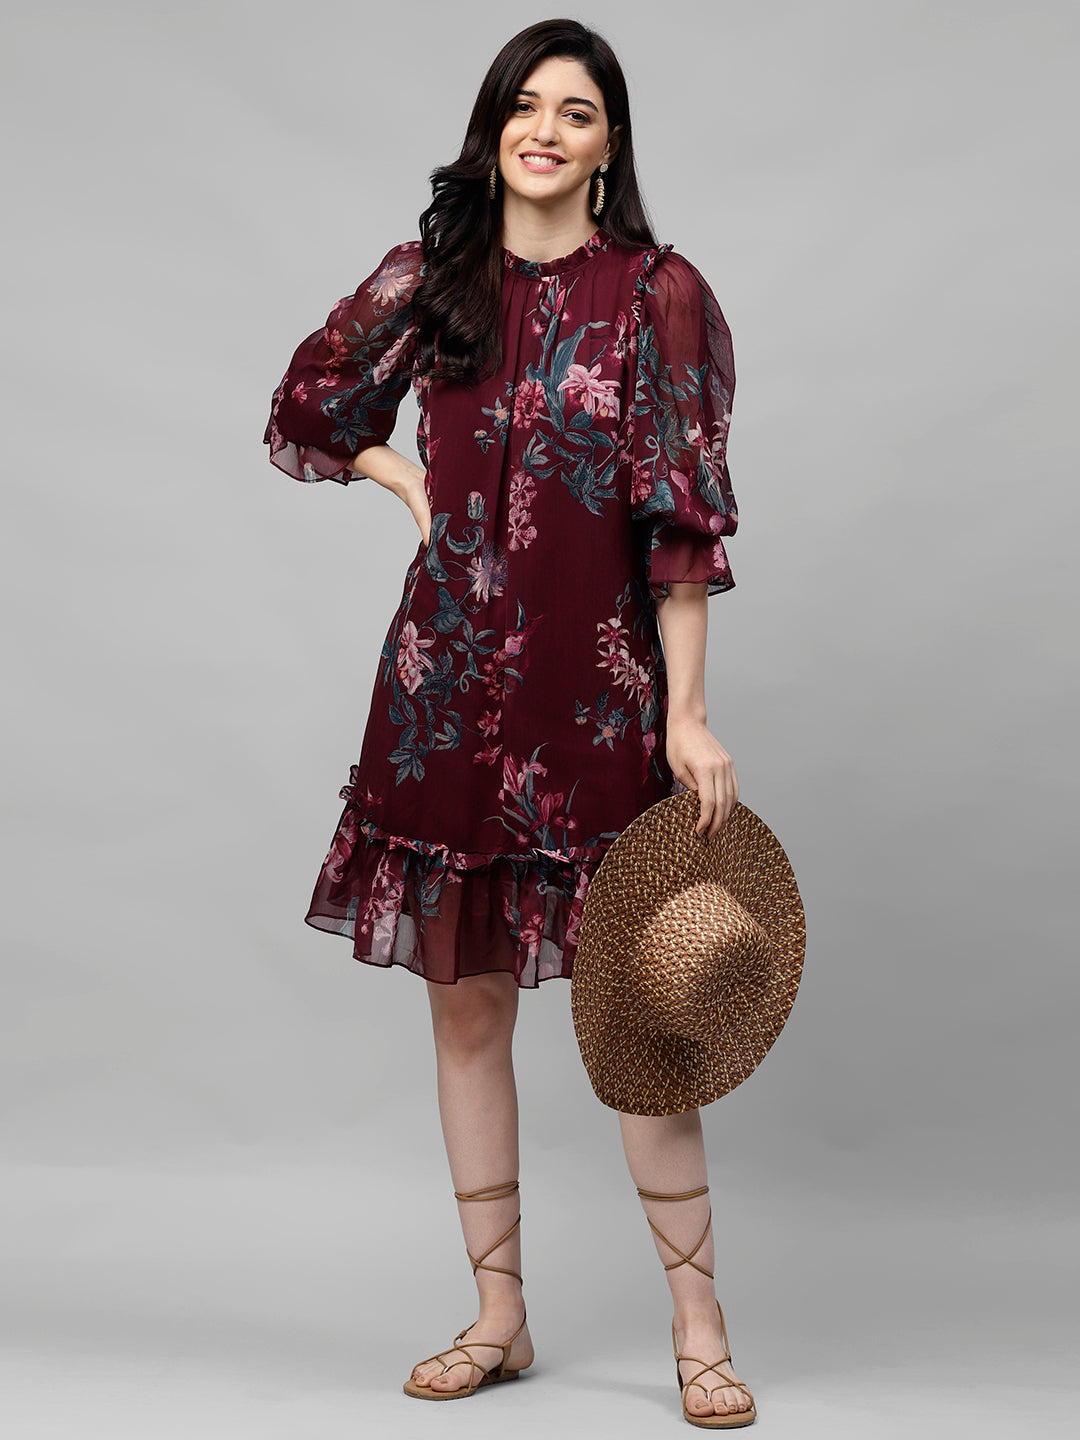 Athena Maroon & PInk Floral Printed A-Line Dress - Athena Lifestyle